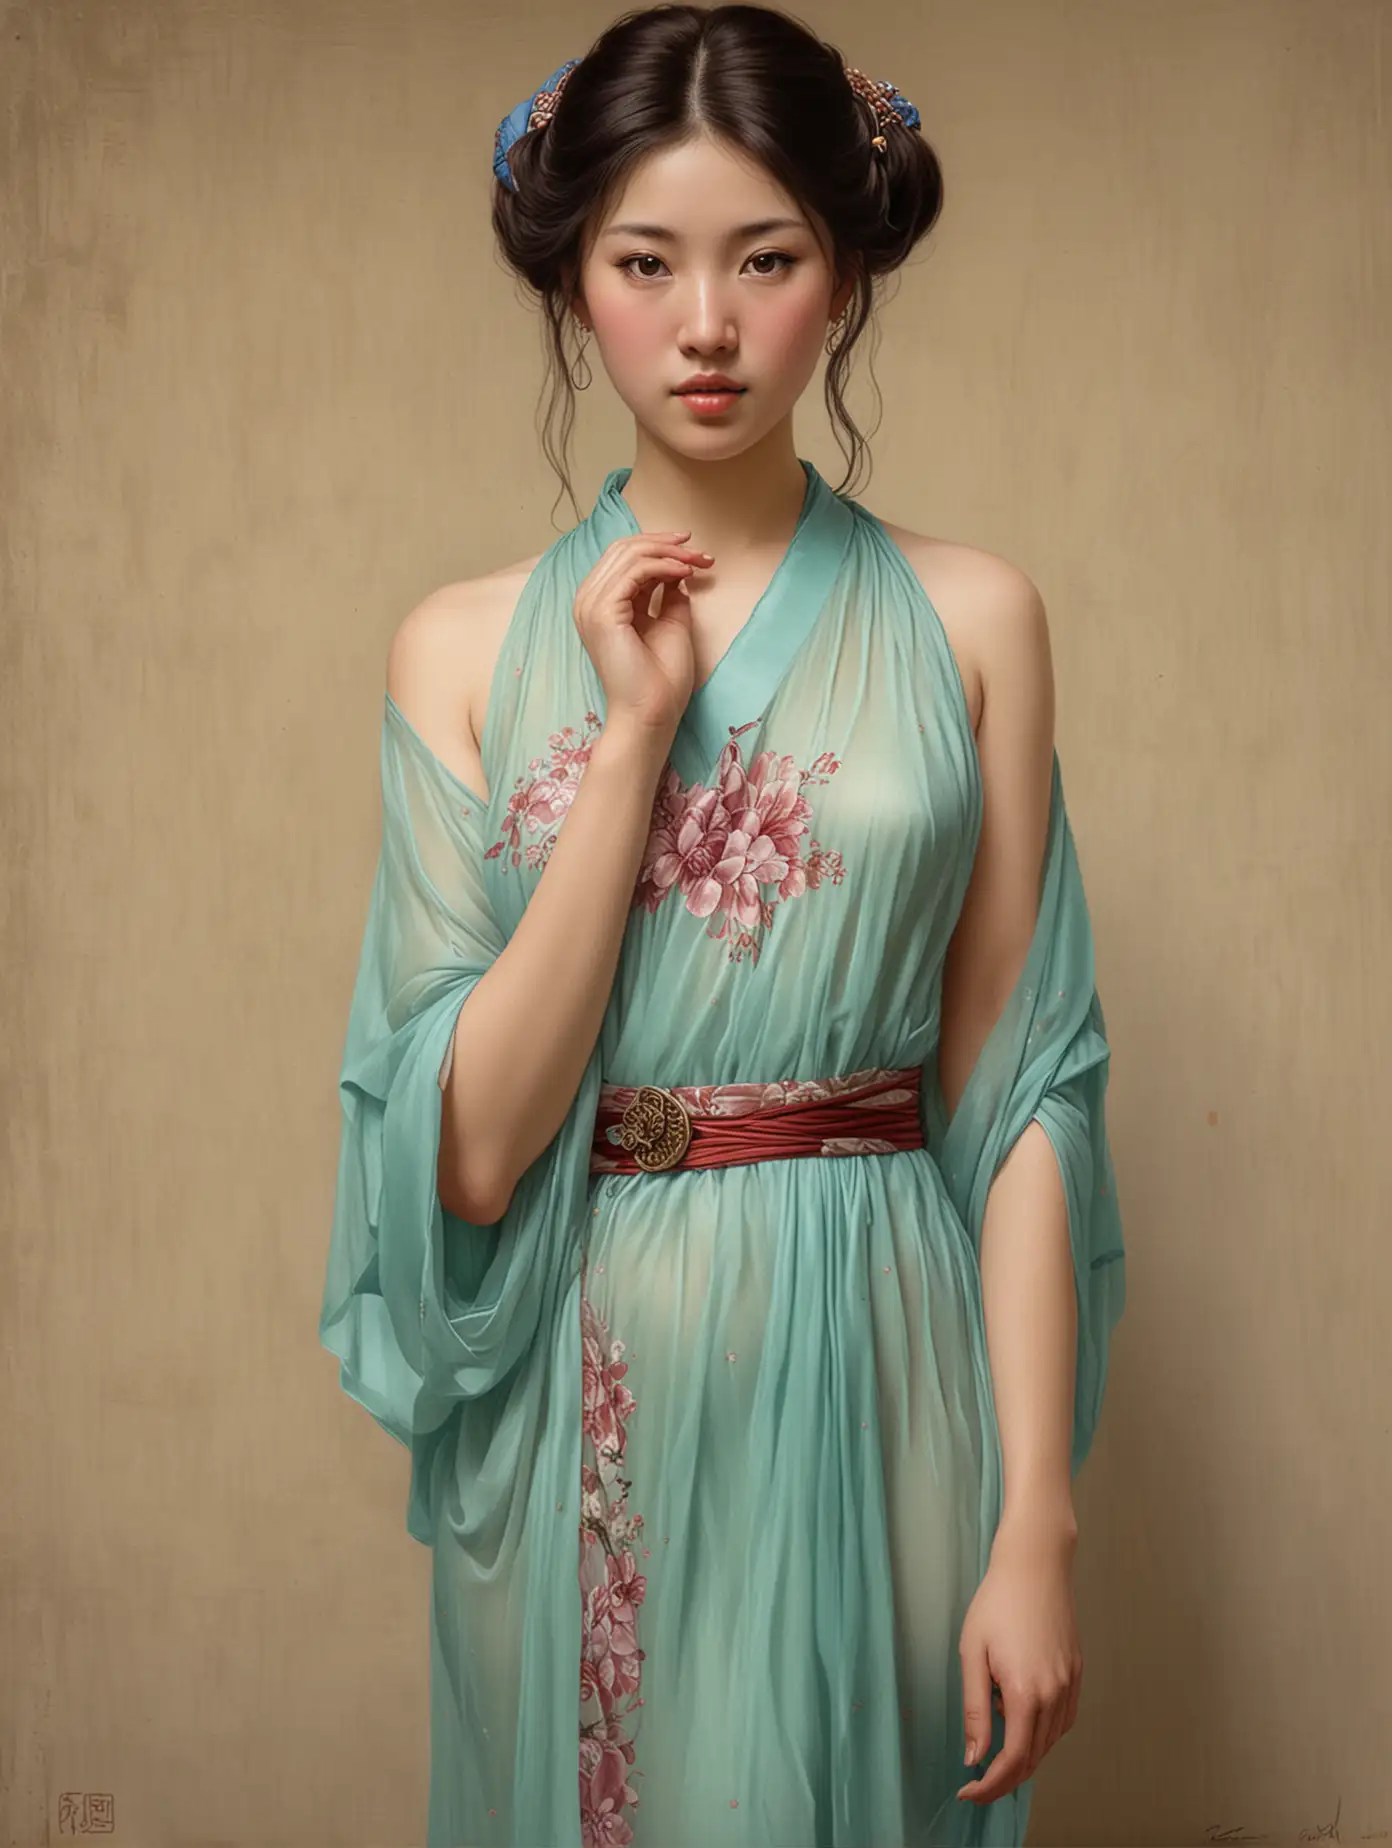 Elegant-Chinese-Woman-Undressing-in-Sheer-Robe